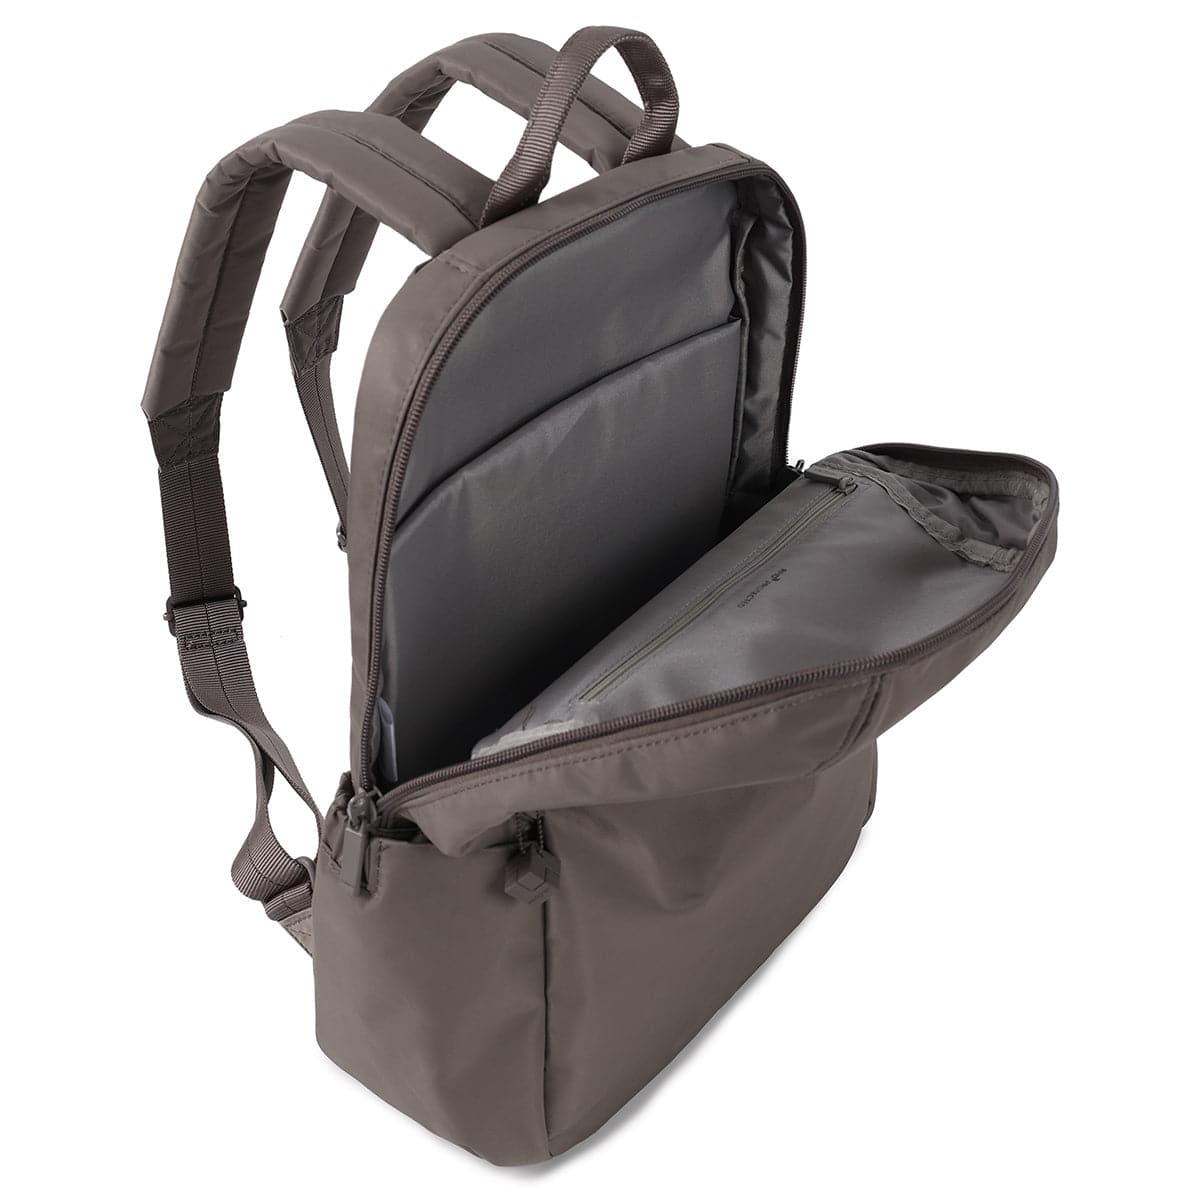 Hedgren Vogue XXL RFID 14" Laptop Backpack